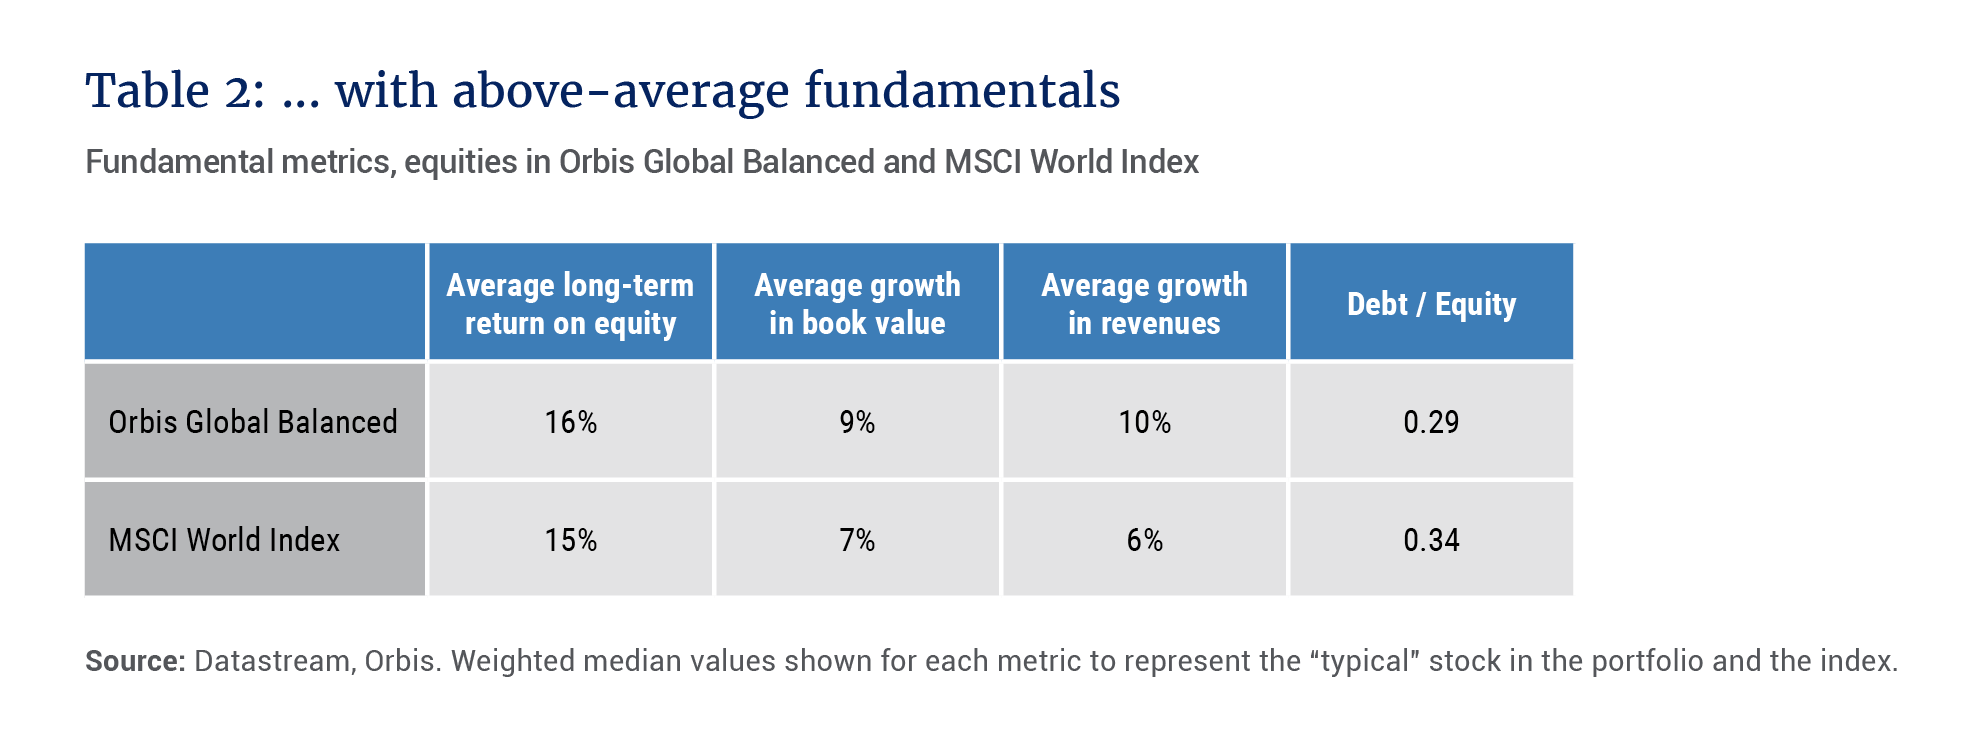 Fundamental metrics, equities in Orbis Global Balanced and MSCI World Index - Allan Gray